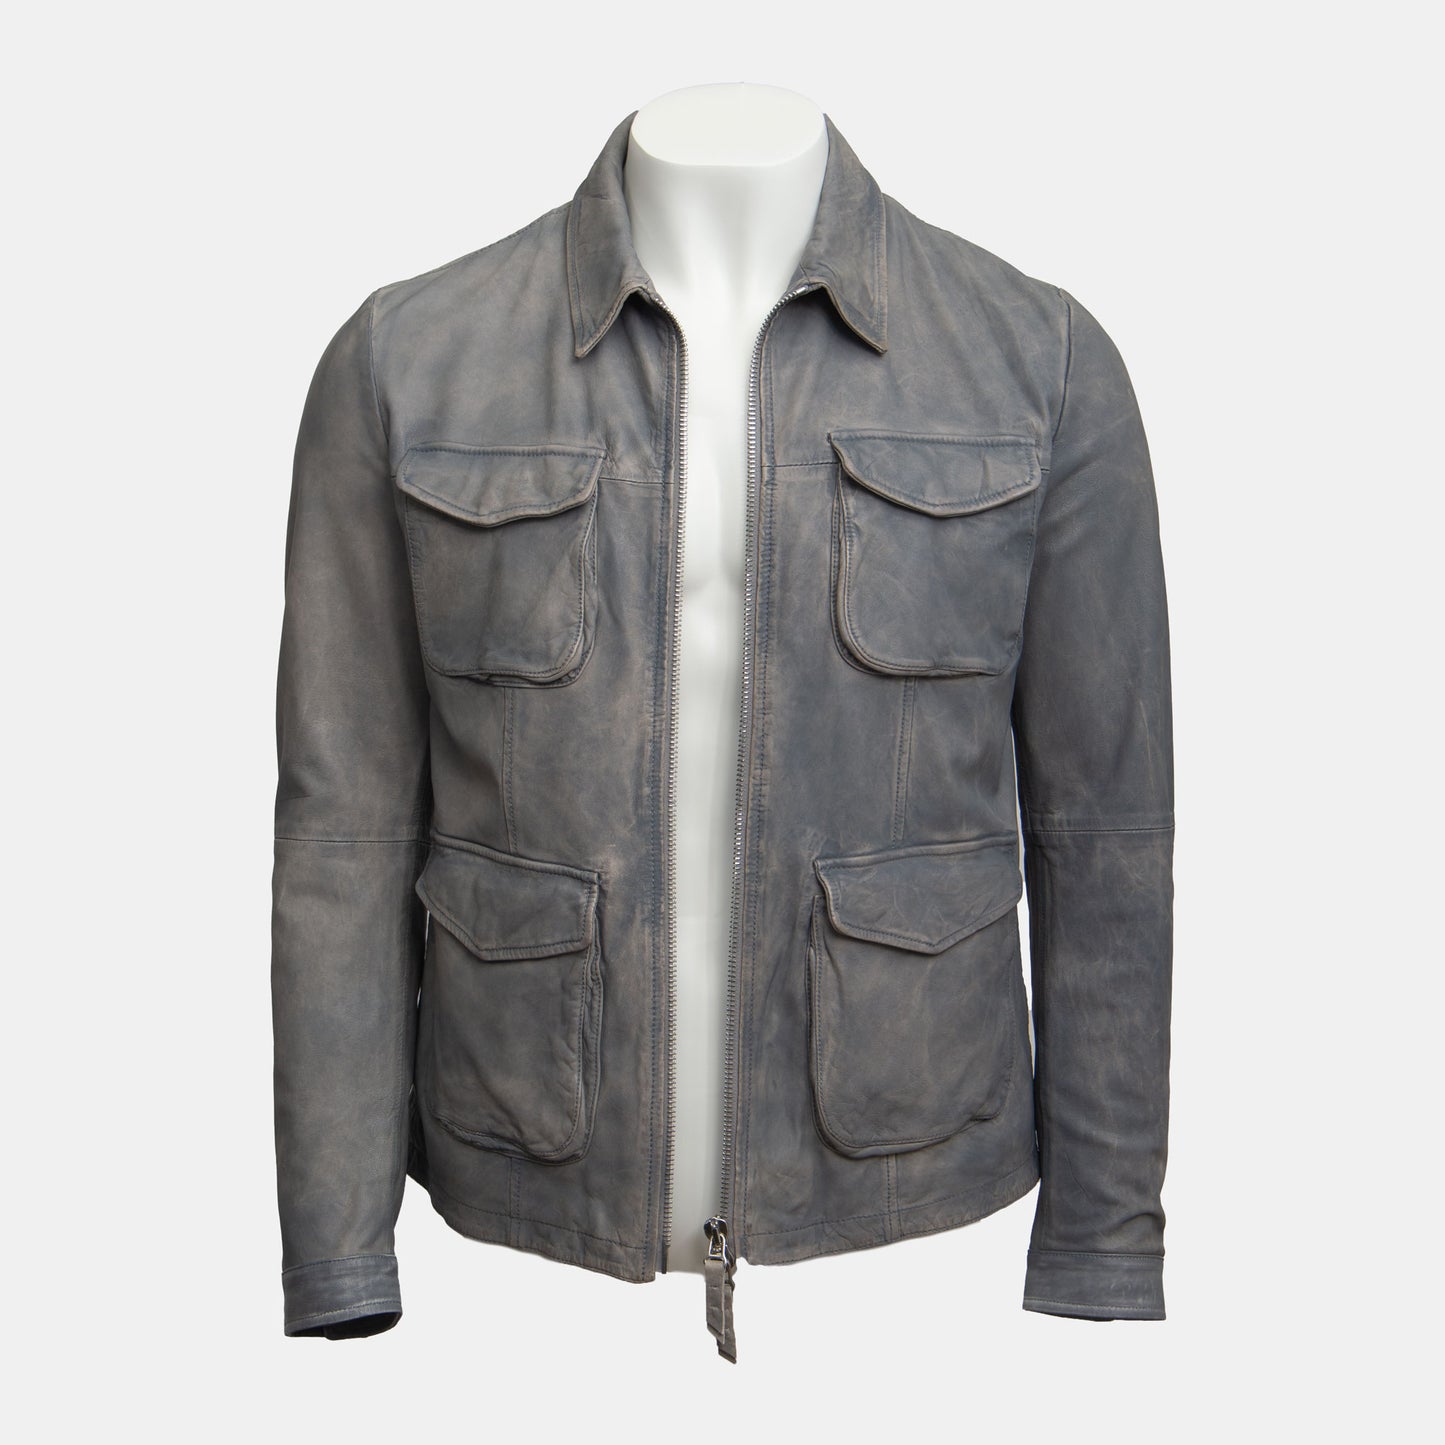 Khaki's of Carmel - Gimo's Dino Leather Jacket in Silver